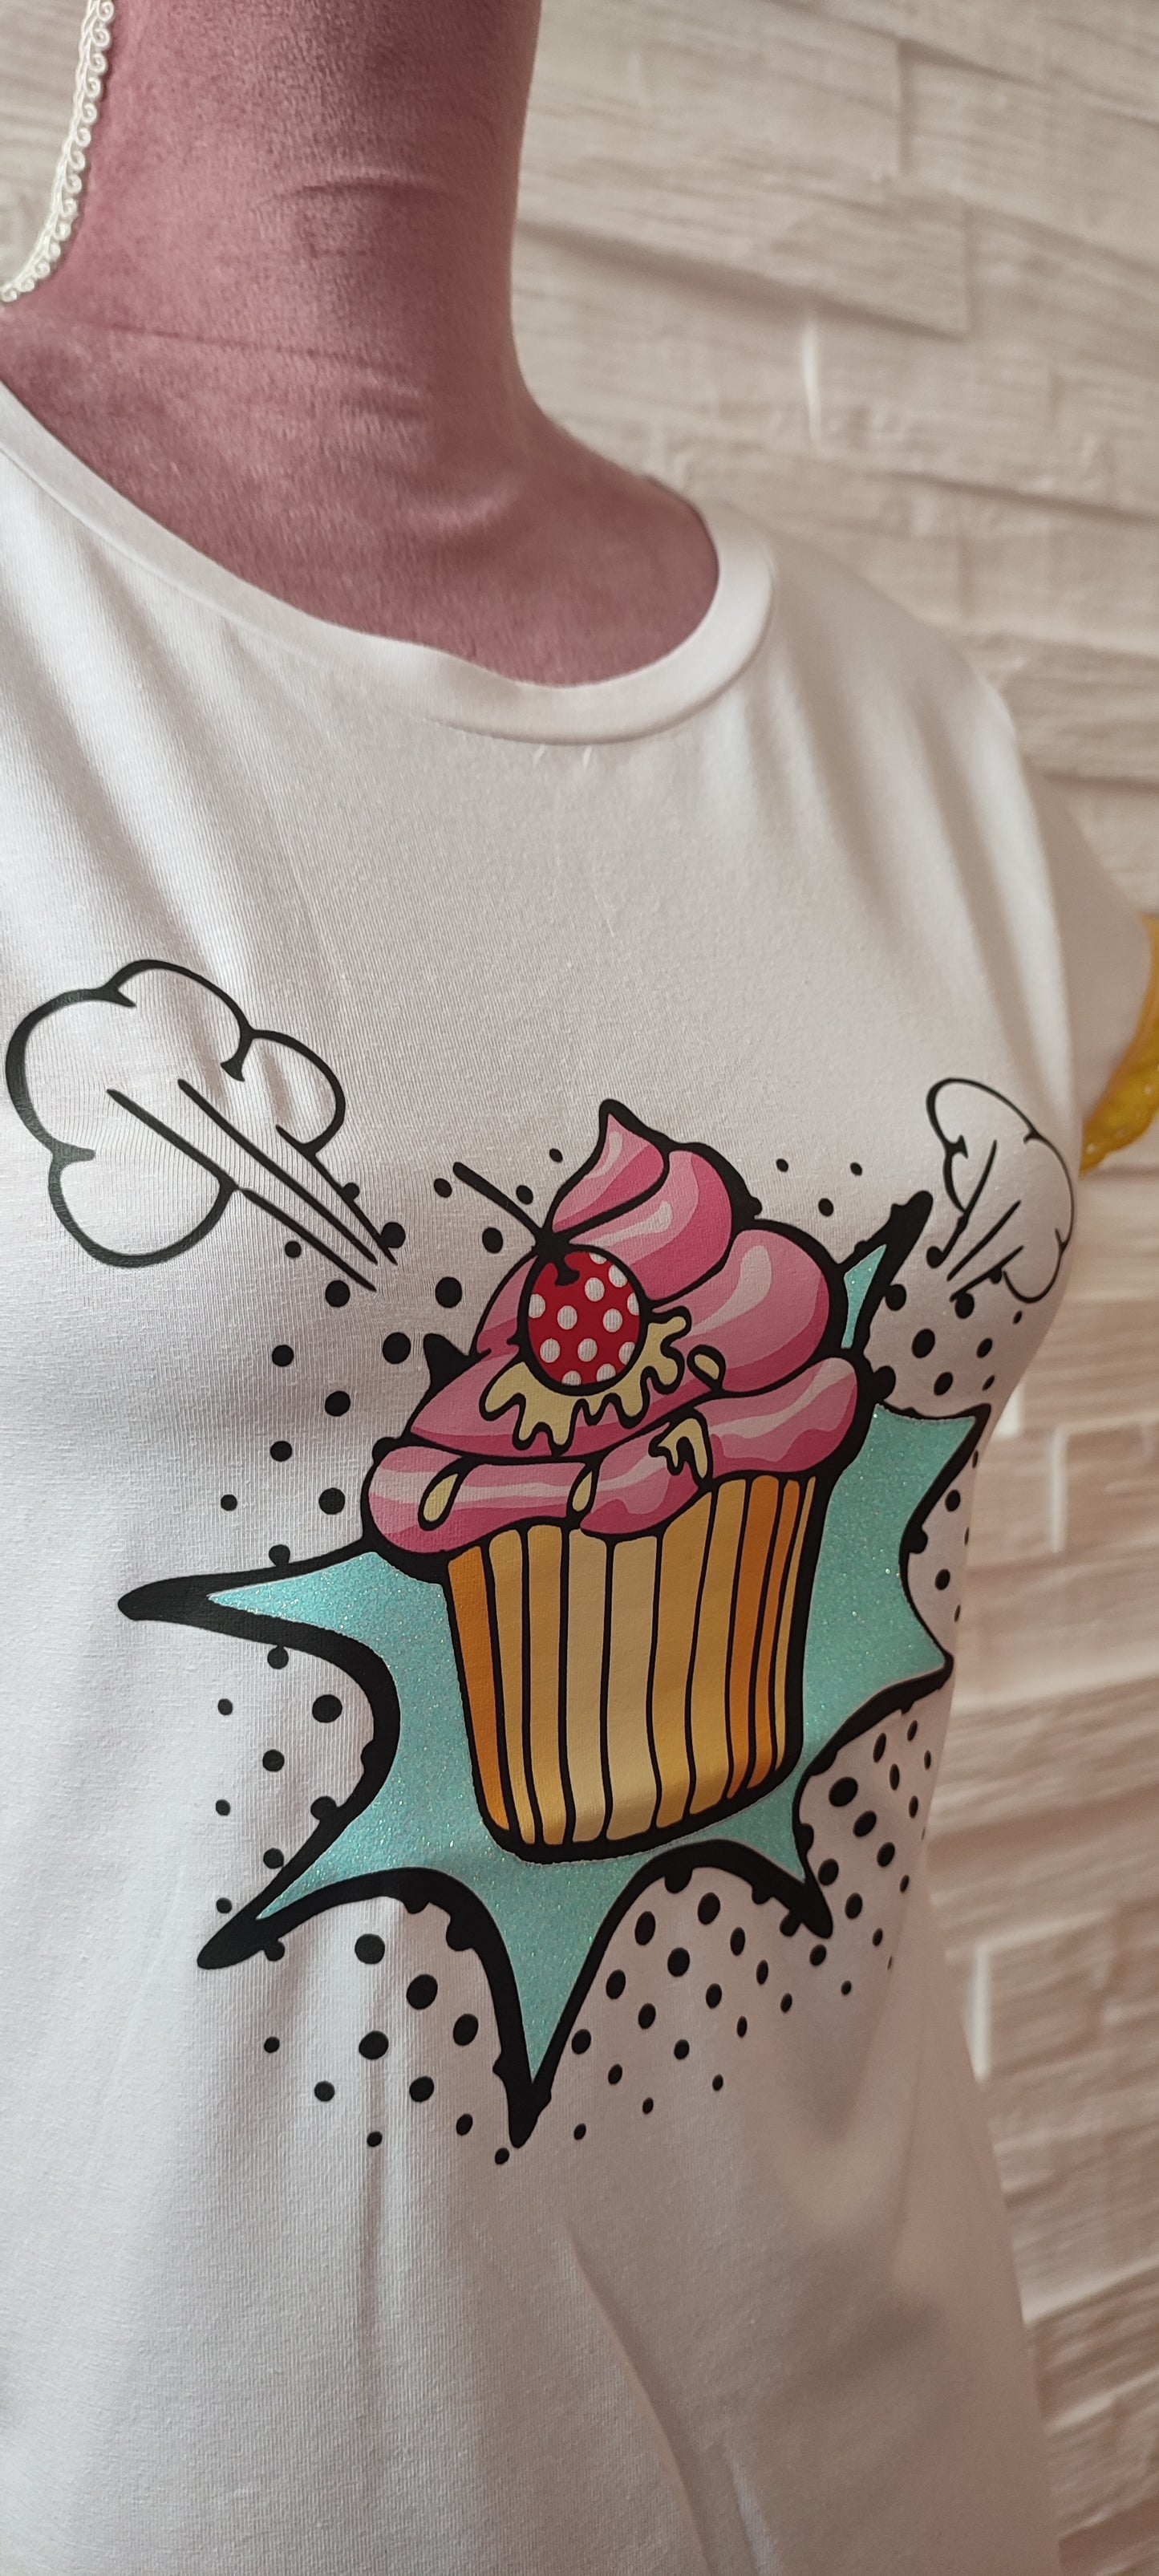 T shirt capcake